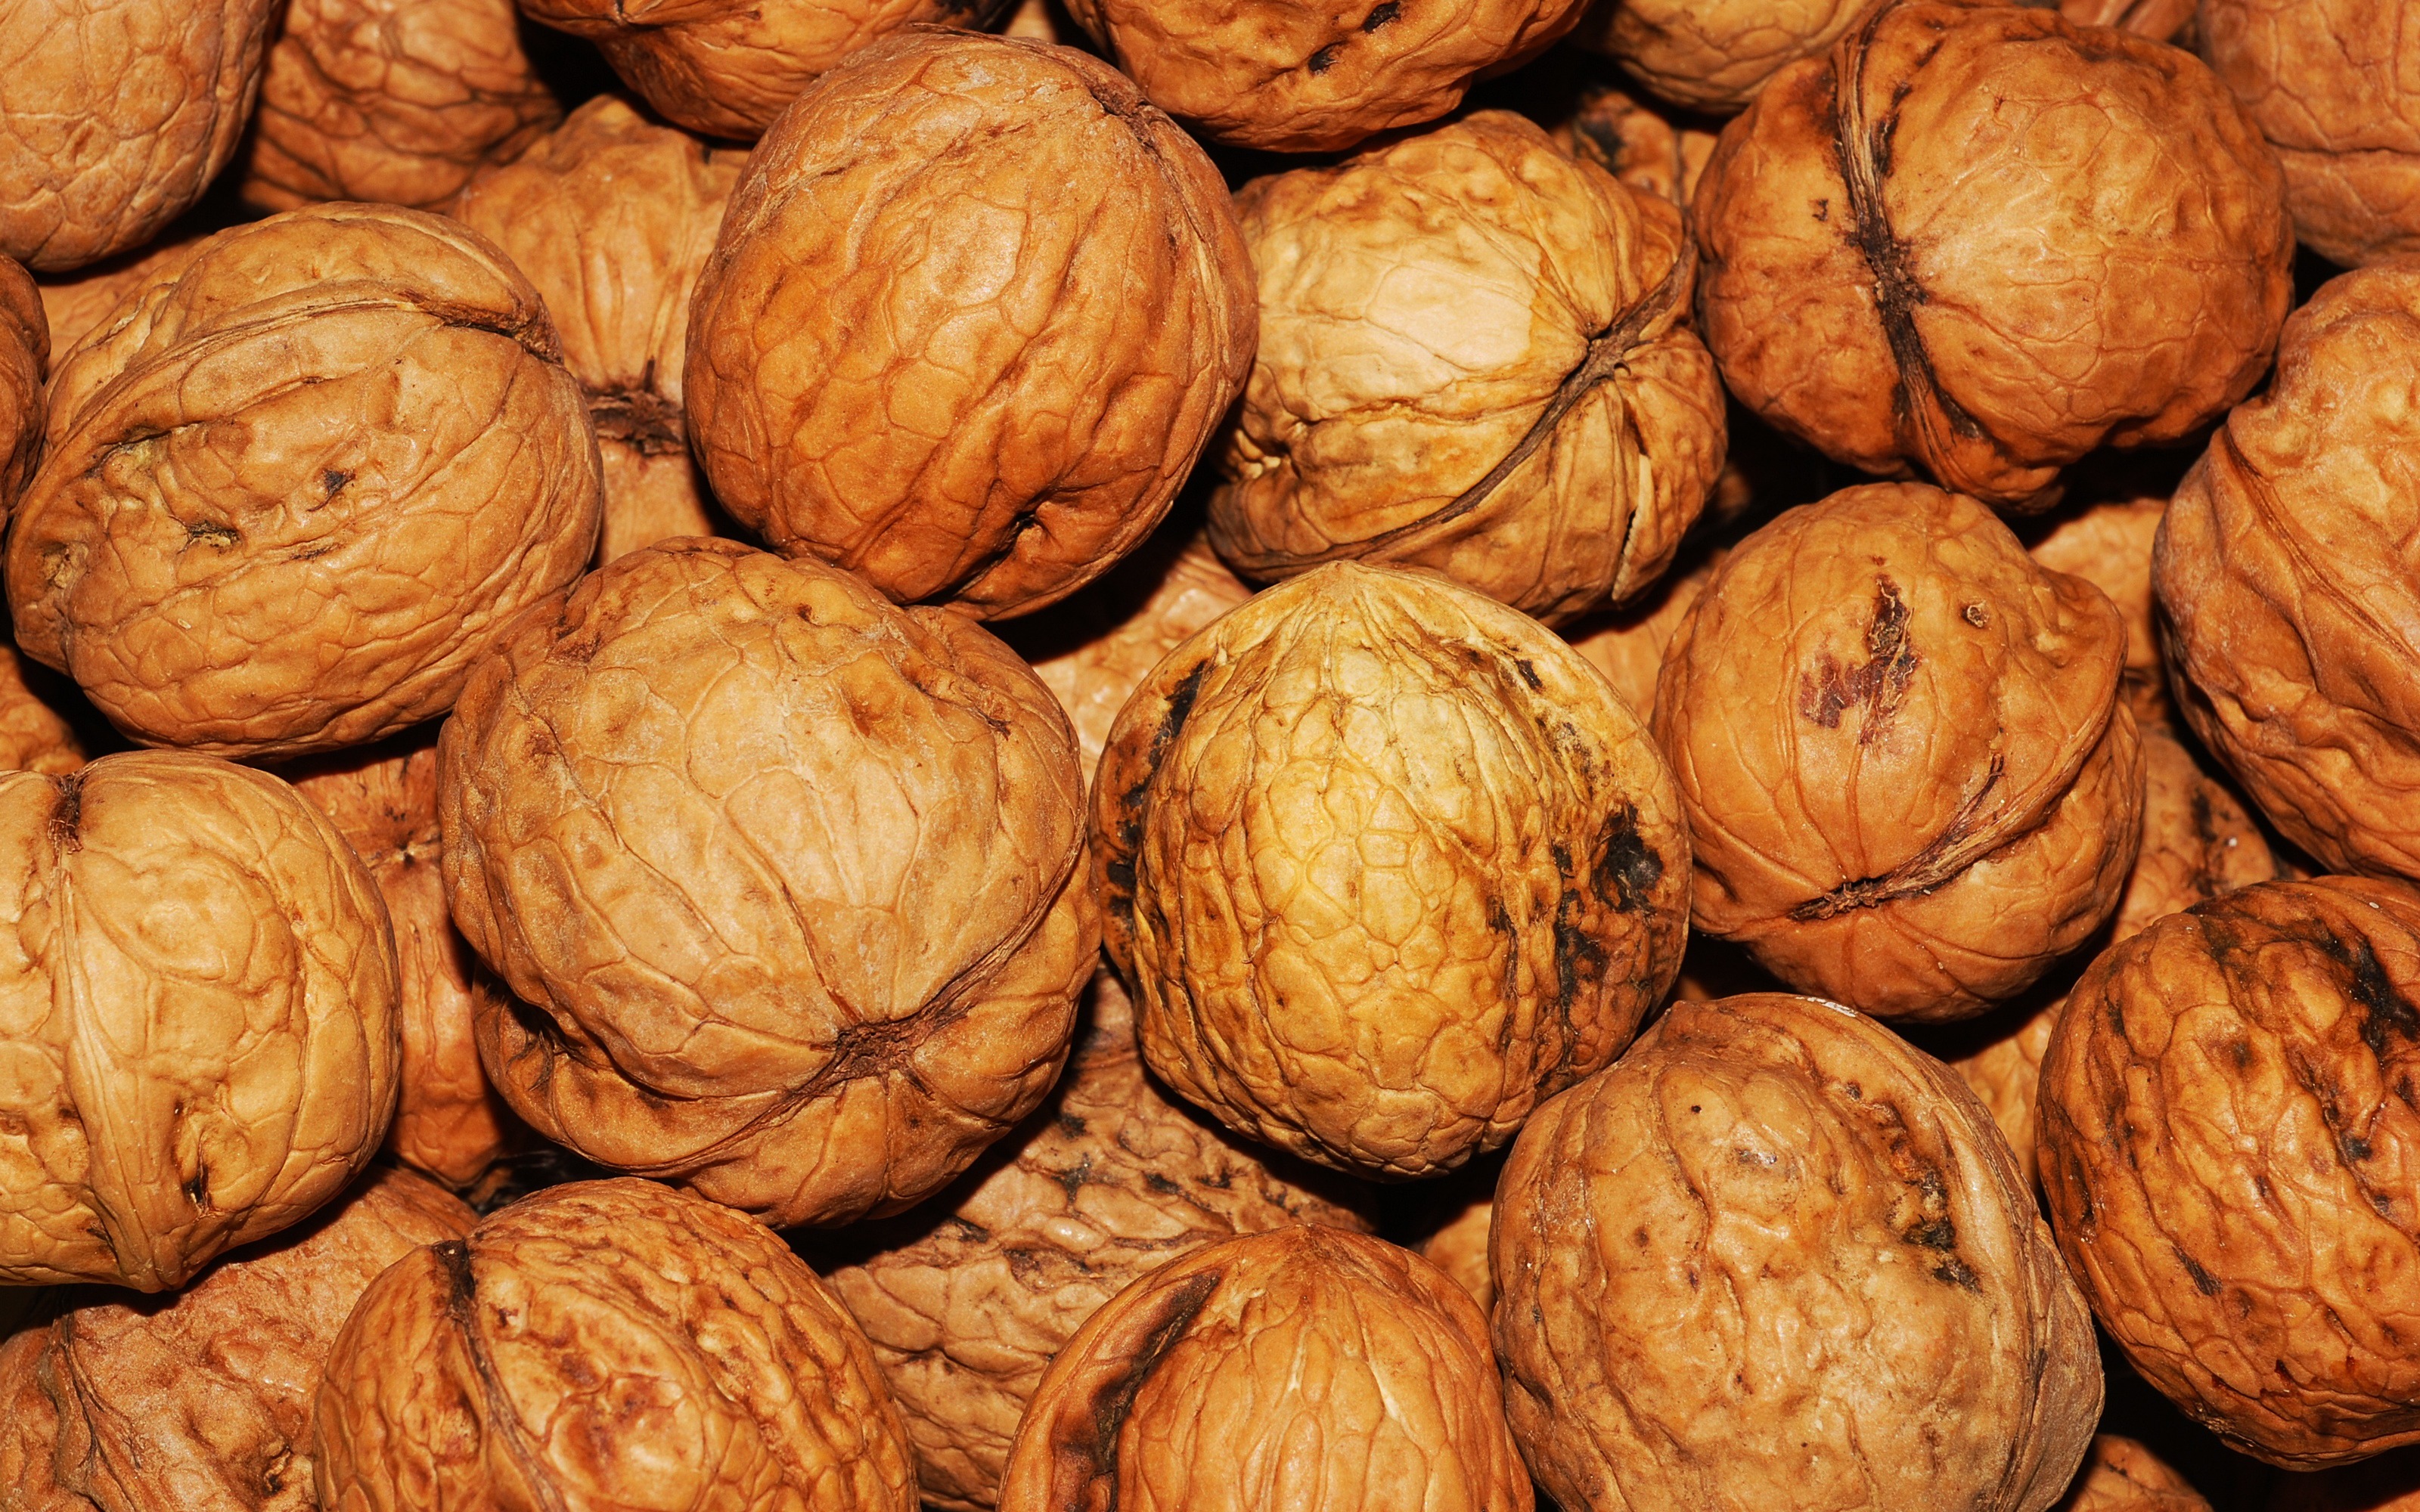 File:Pile of walnuts.jpg - Wikimedia Commons